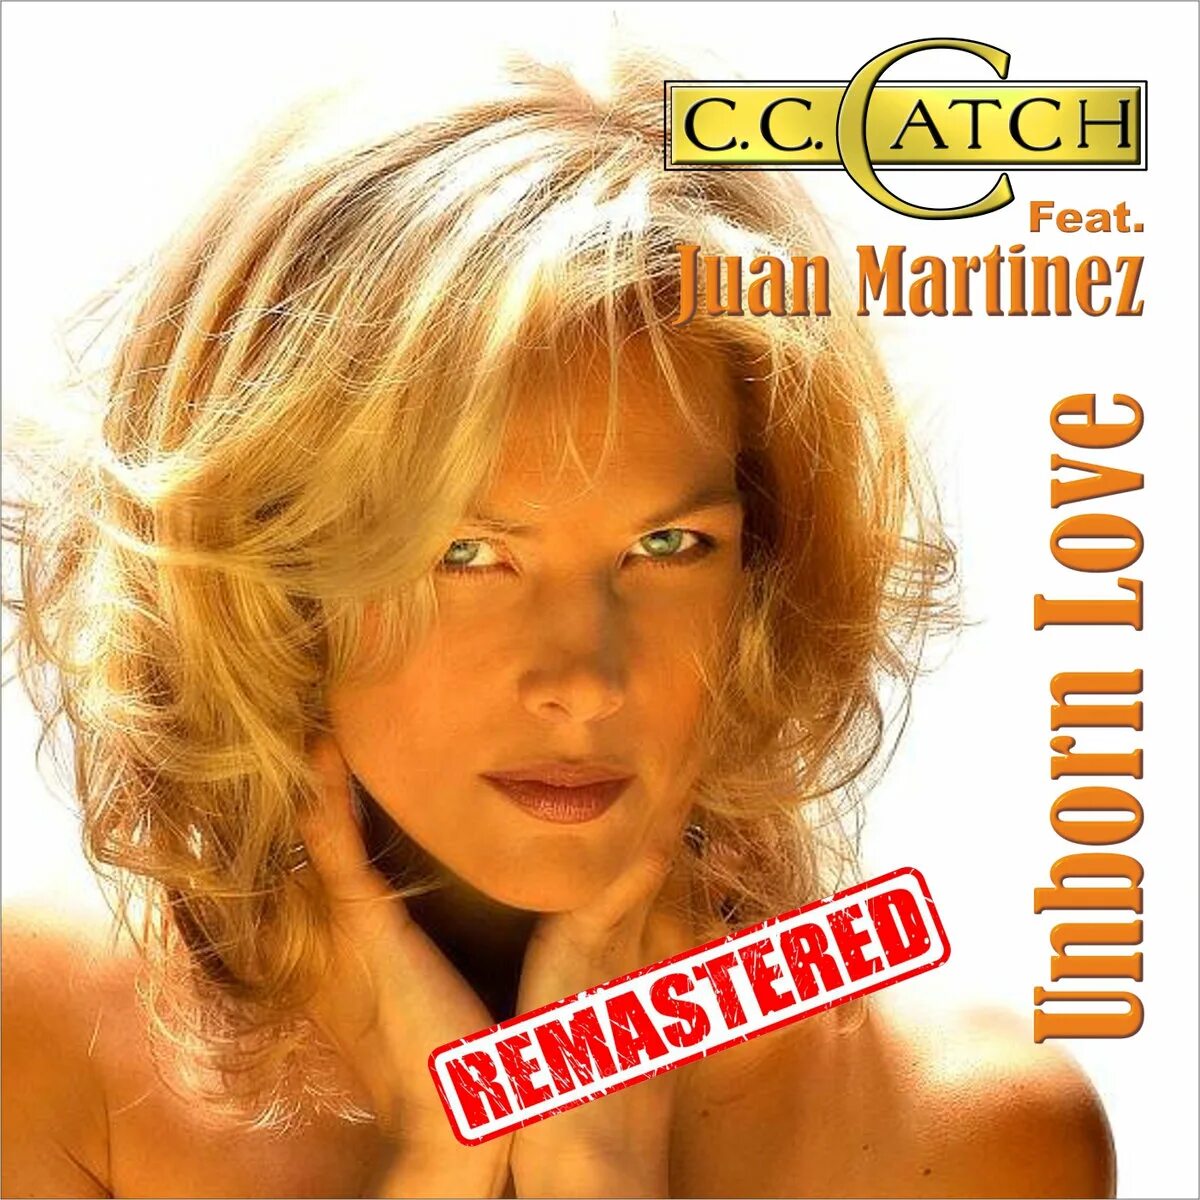 Juan Martinez & c. c. catch. C C catch обложки альбомов. Клавишник у cc catch. Cc catch album Cover. C c catch i can